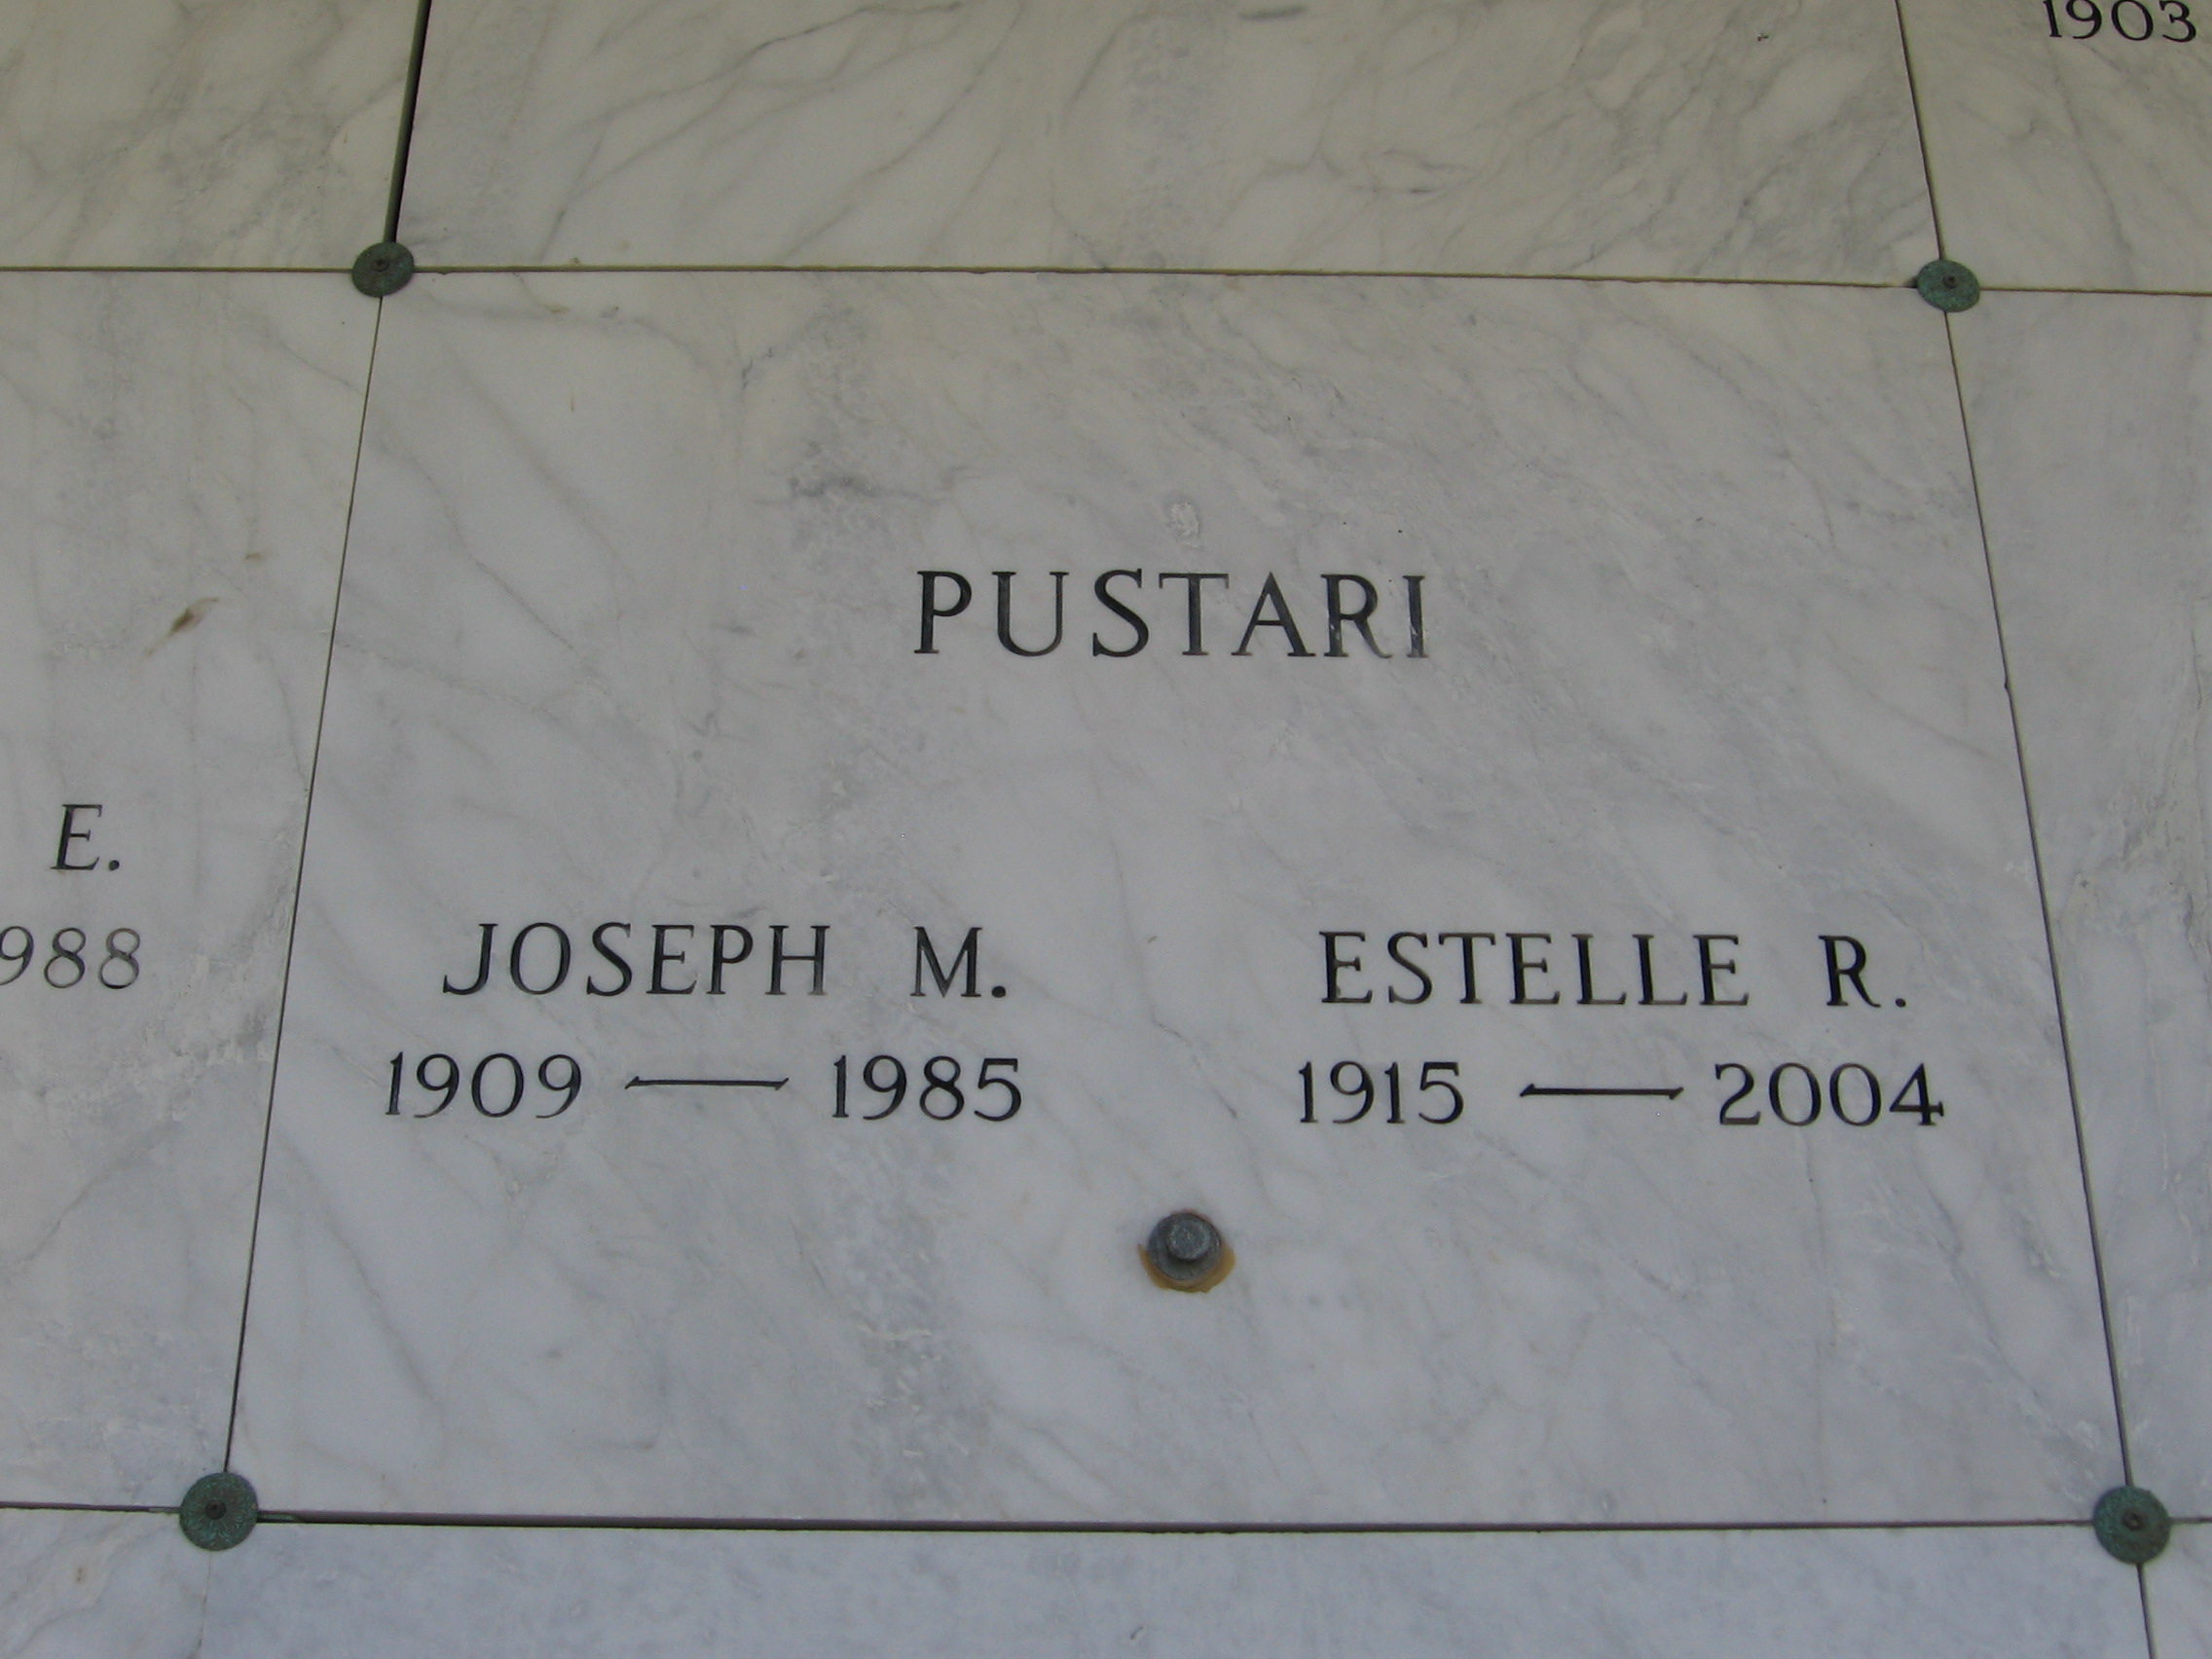 Joseph M Pustari